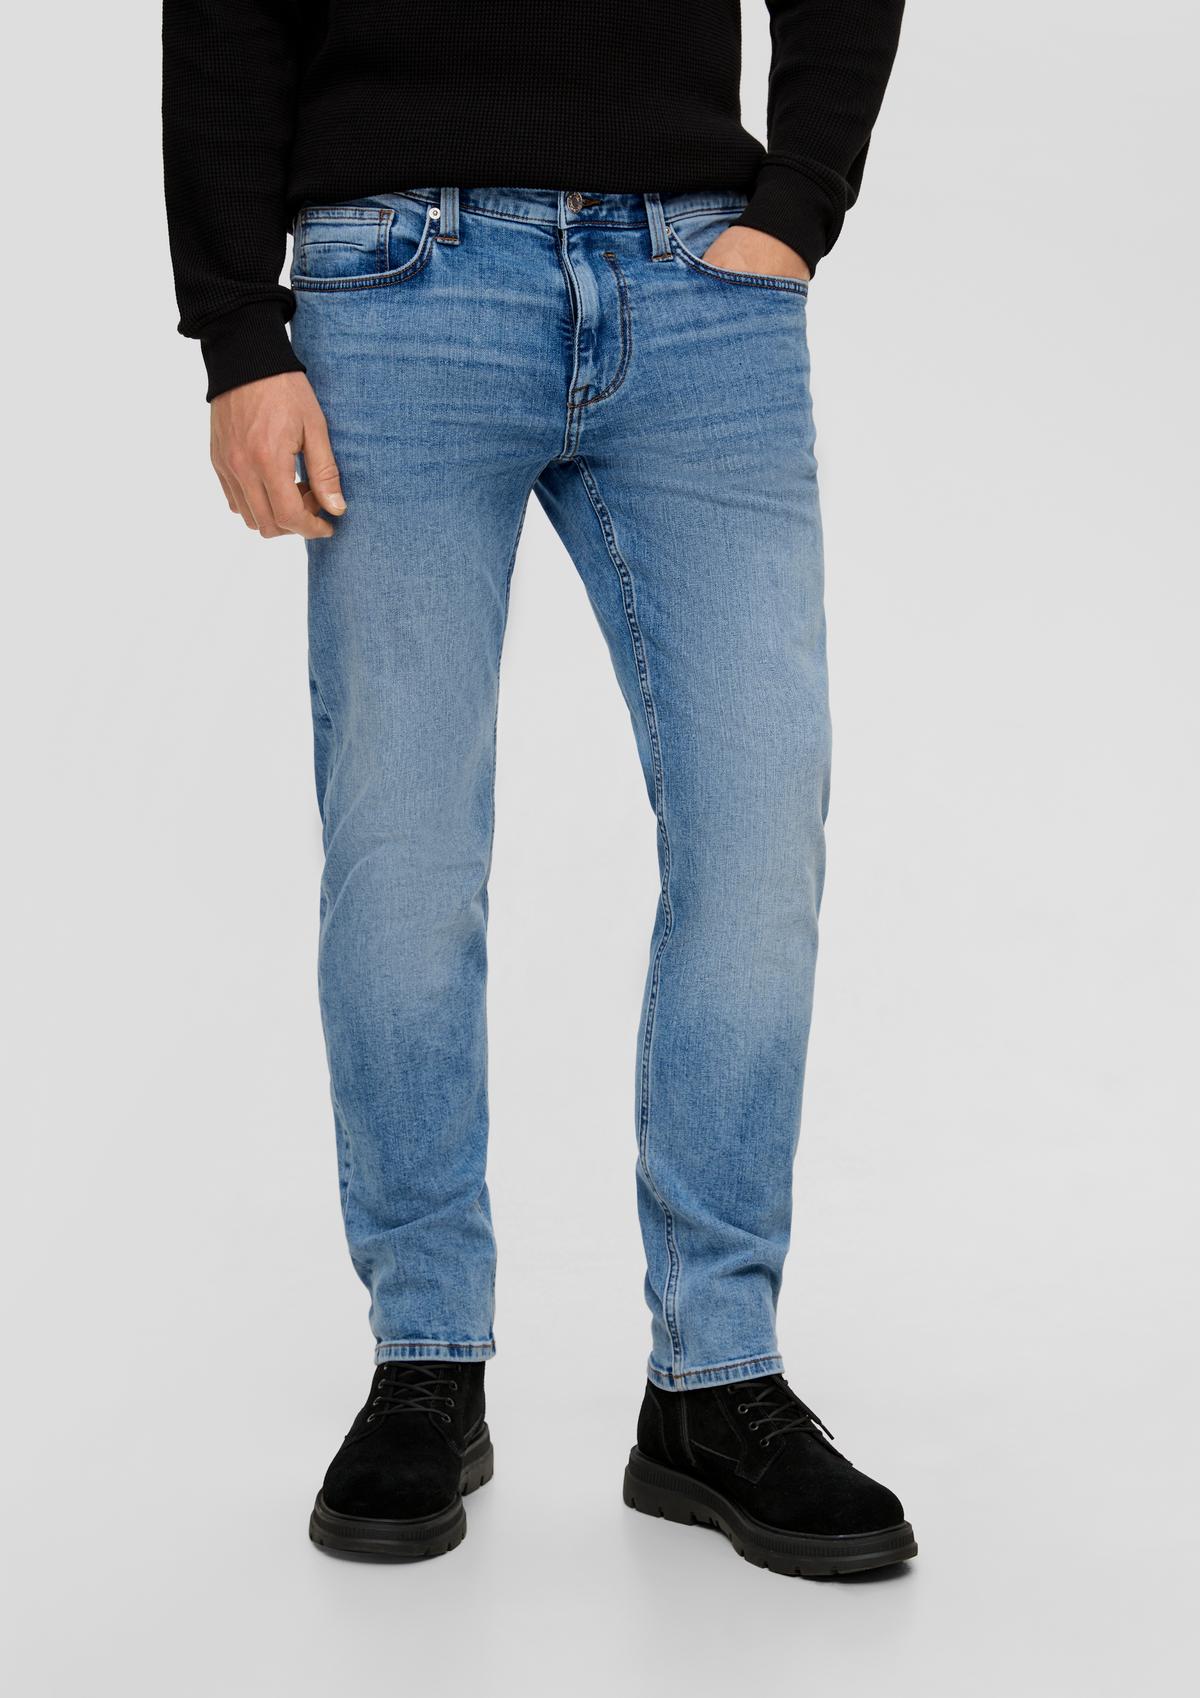 Jeans hlače/kroj Slim Fit/Mid Rise/ozke hlačnice